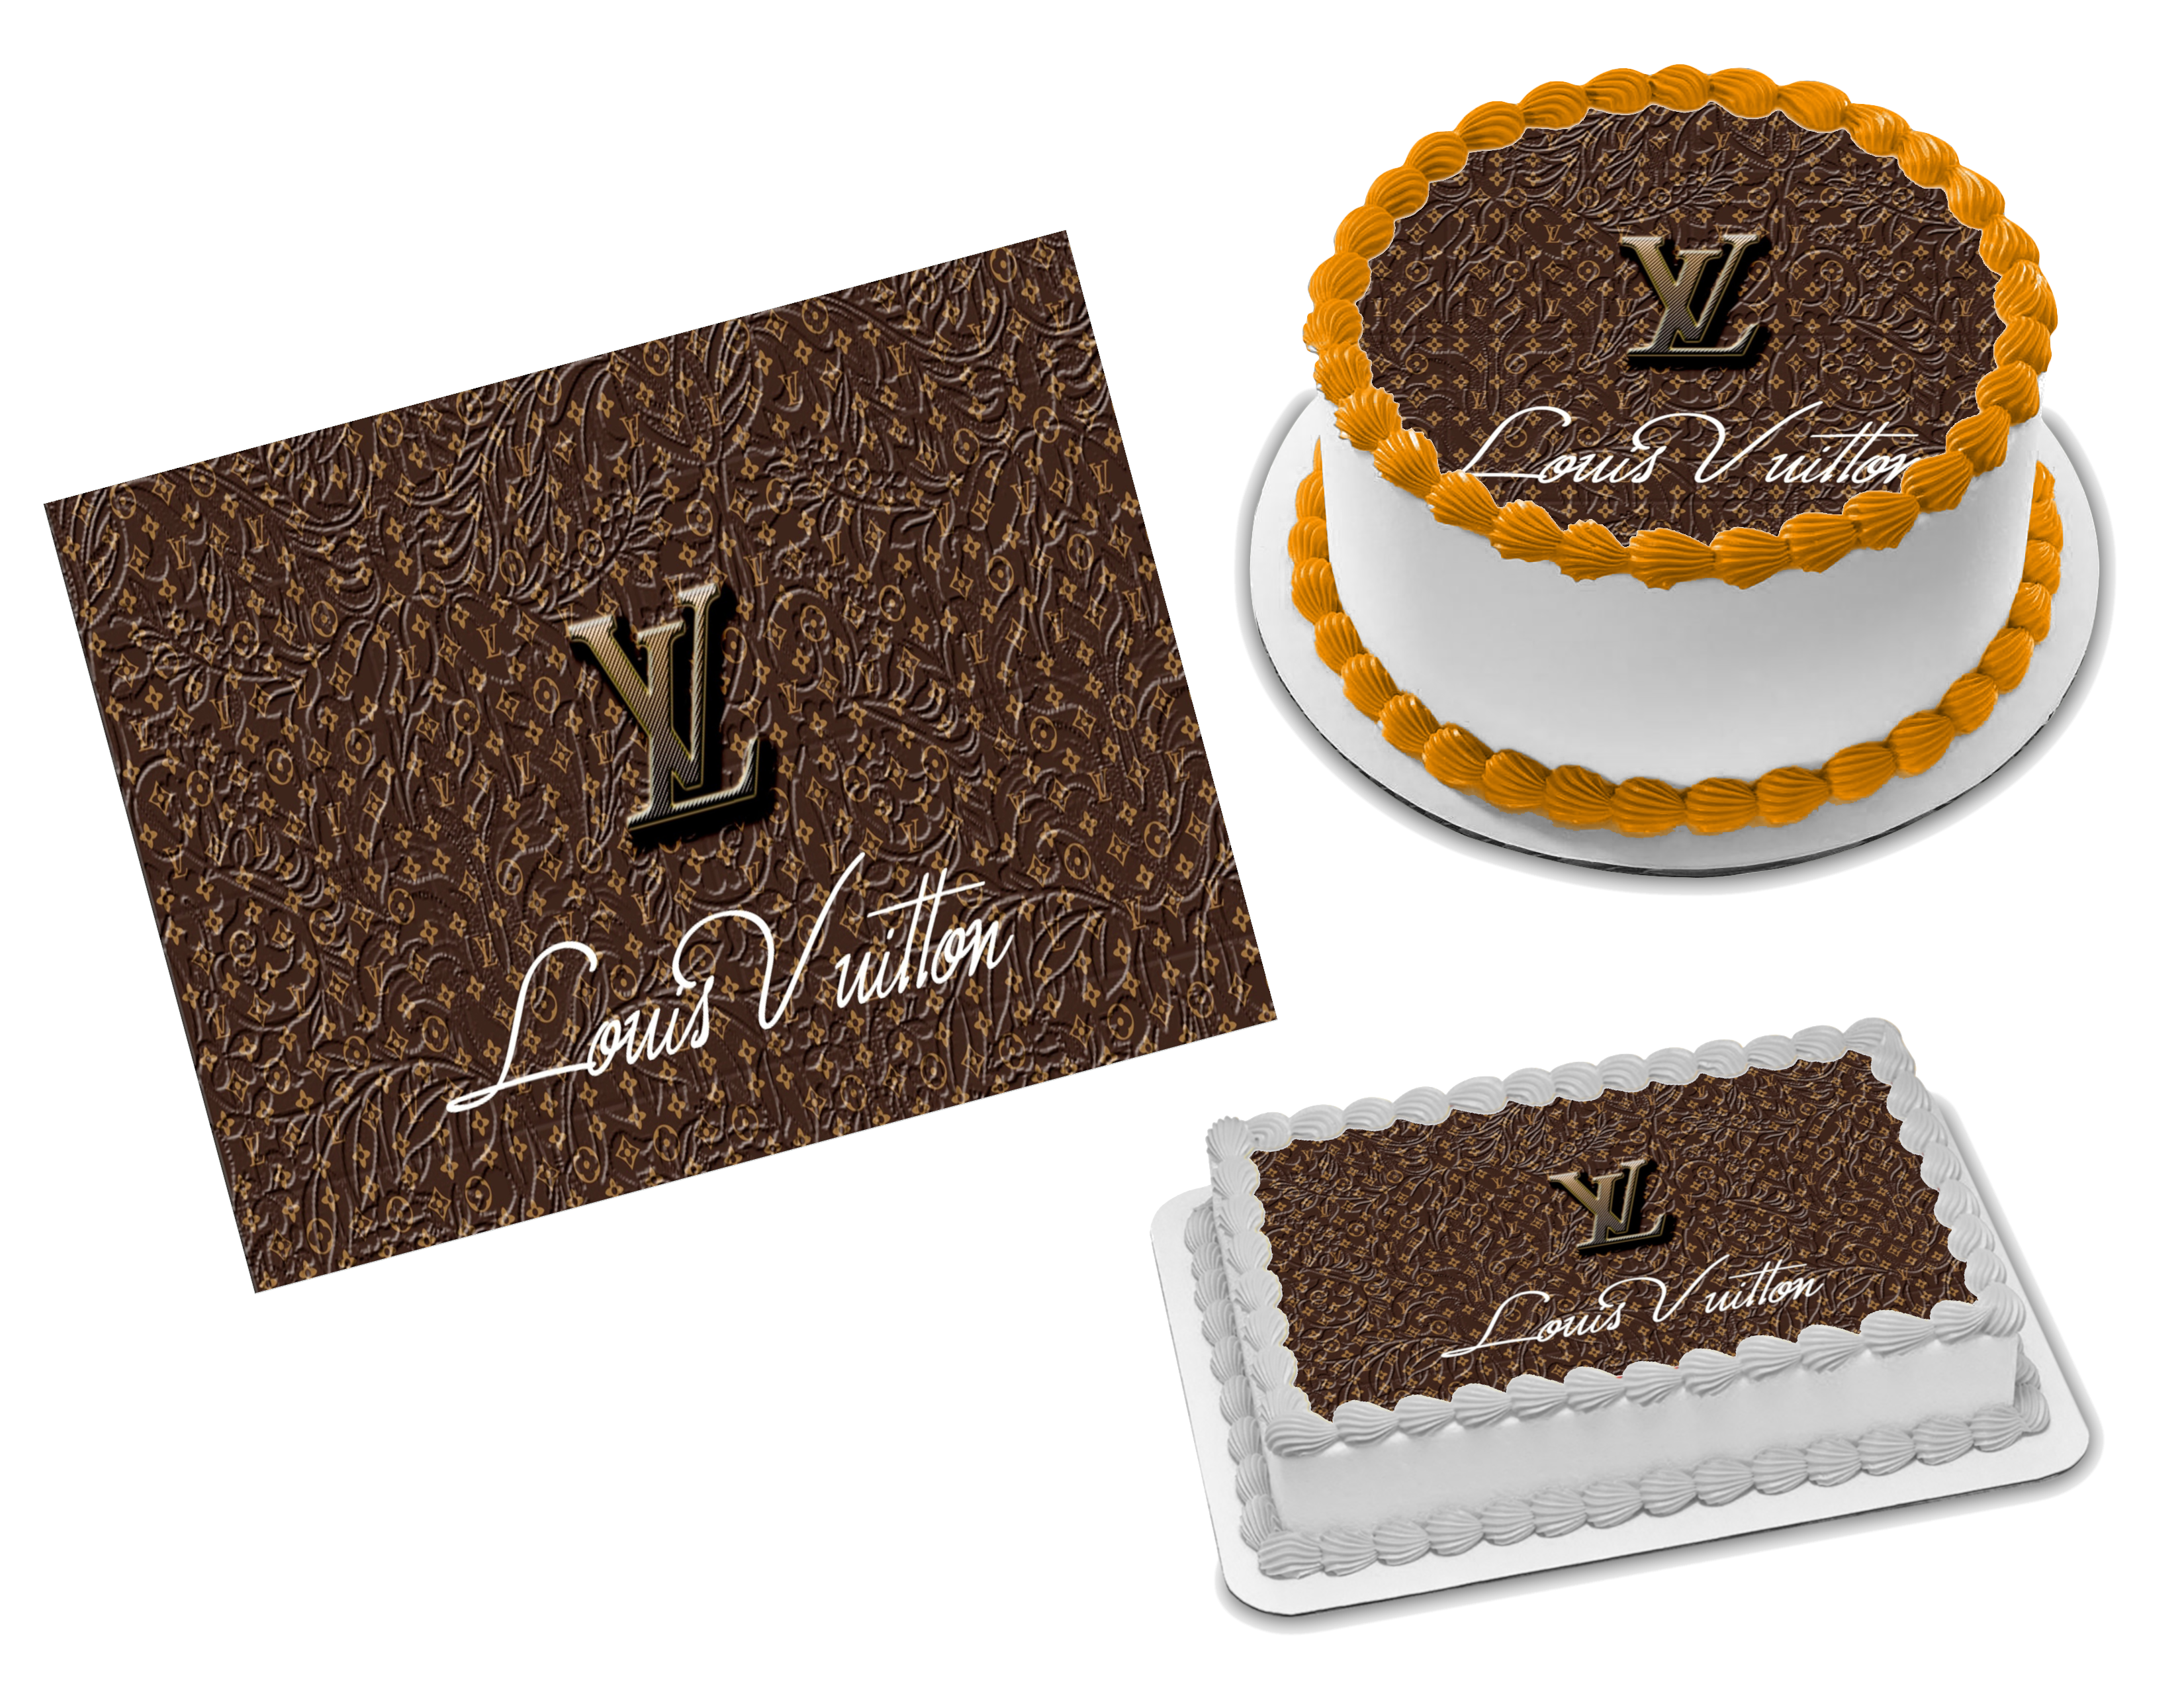 Louis Vuitton Purple Edible Image Frosting Sheet #3 (70+ sizes)